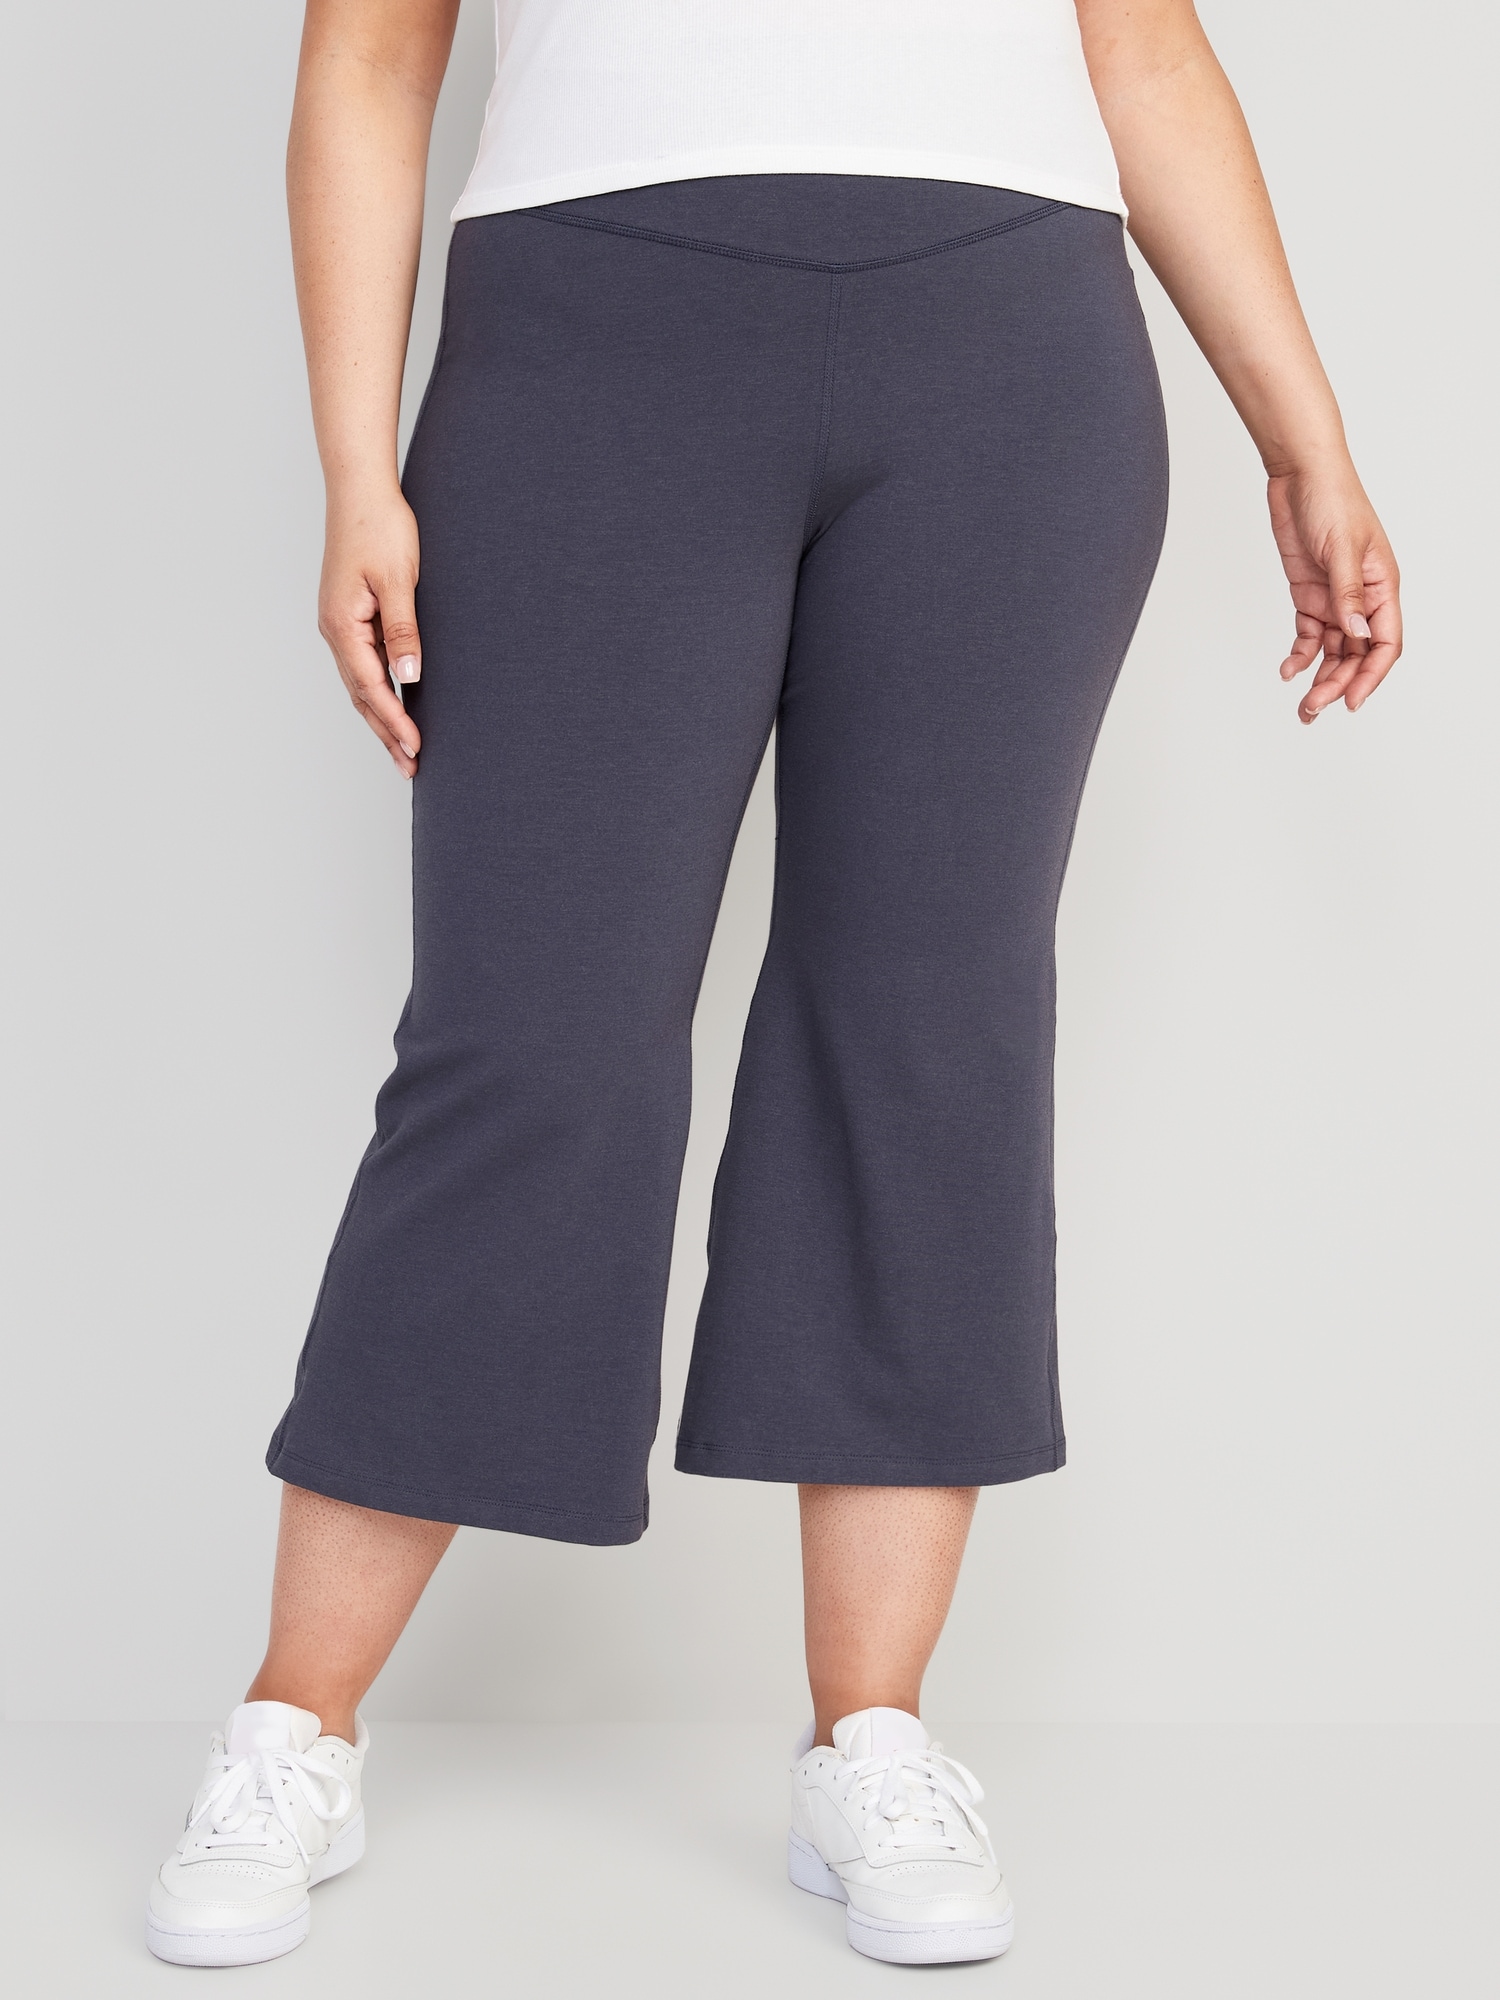 WHLBF Women's Plus Size Yoga Pants Solid Span High Waist Wide Leg Trousers  Yoga Pants Capris Purple 8(L)